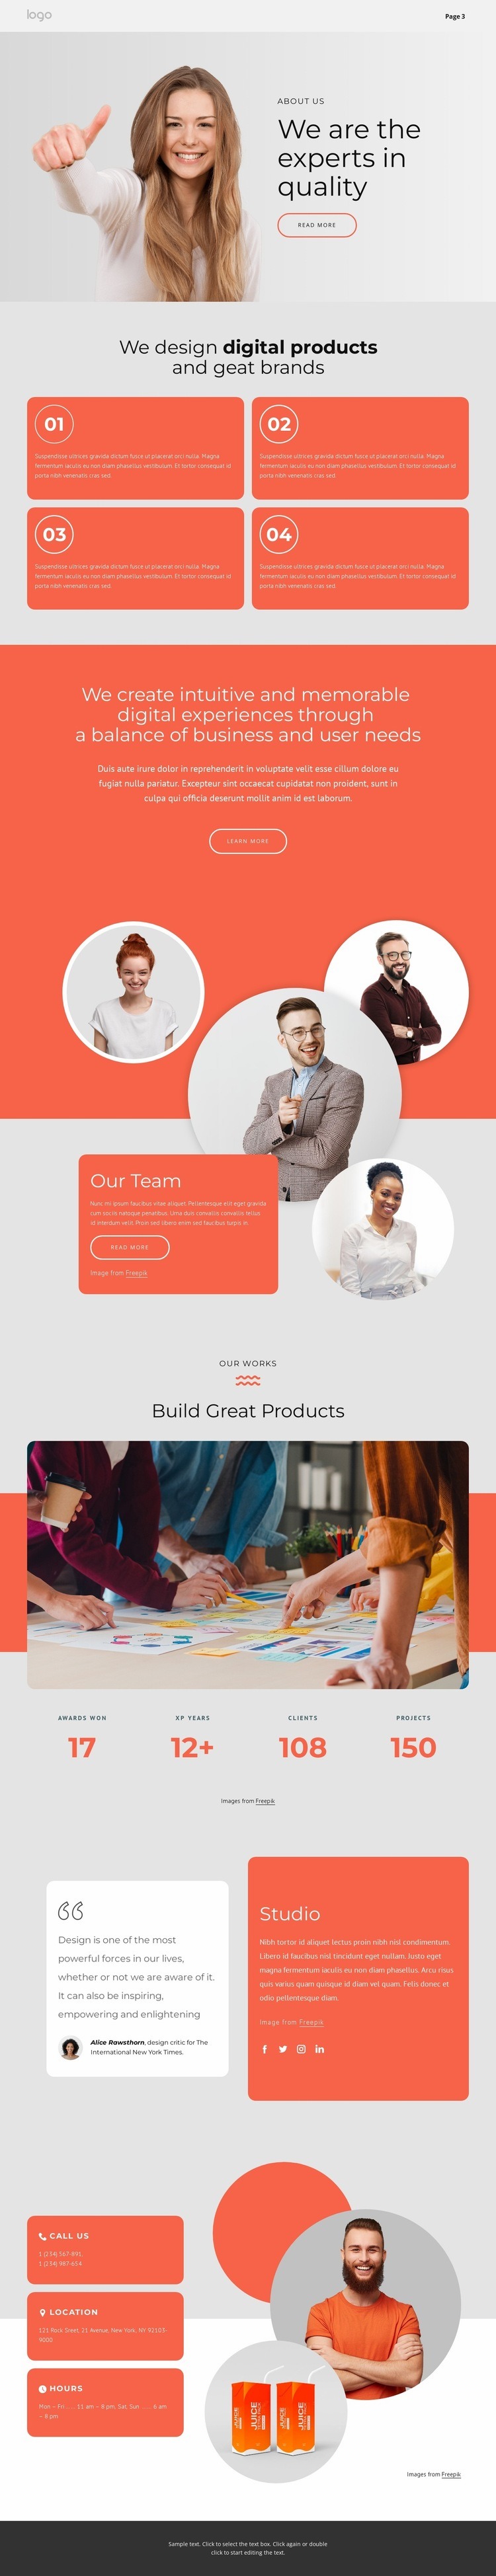 We design great brands Web Page Design